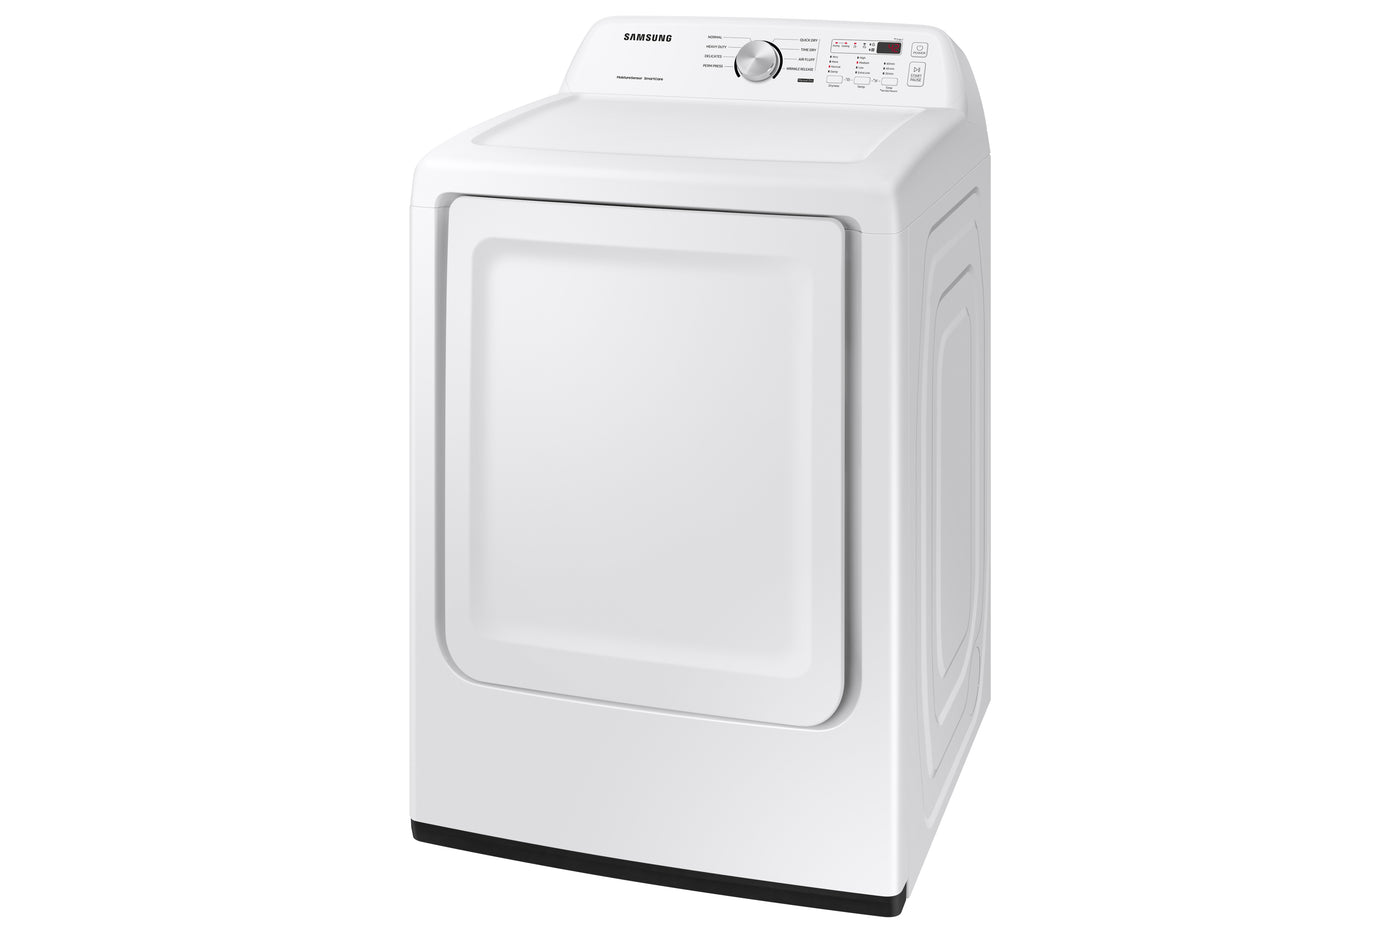 Samsung White Electric Dryer with Sensor Dry (7.2 Cu.Ft) - DVE45T3200W/AC